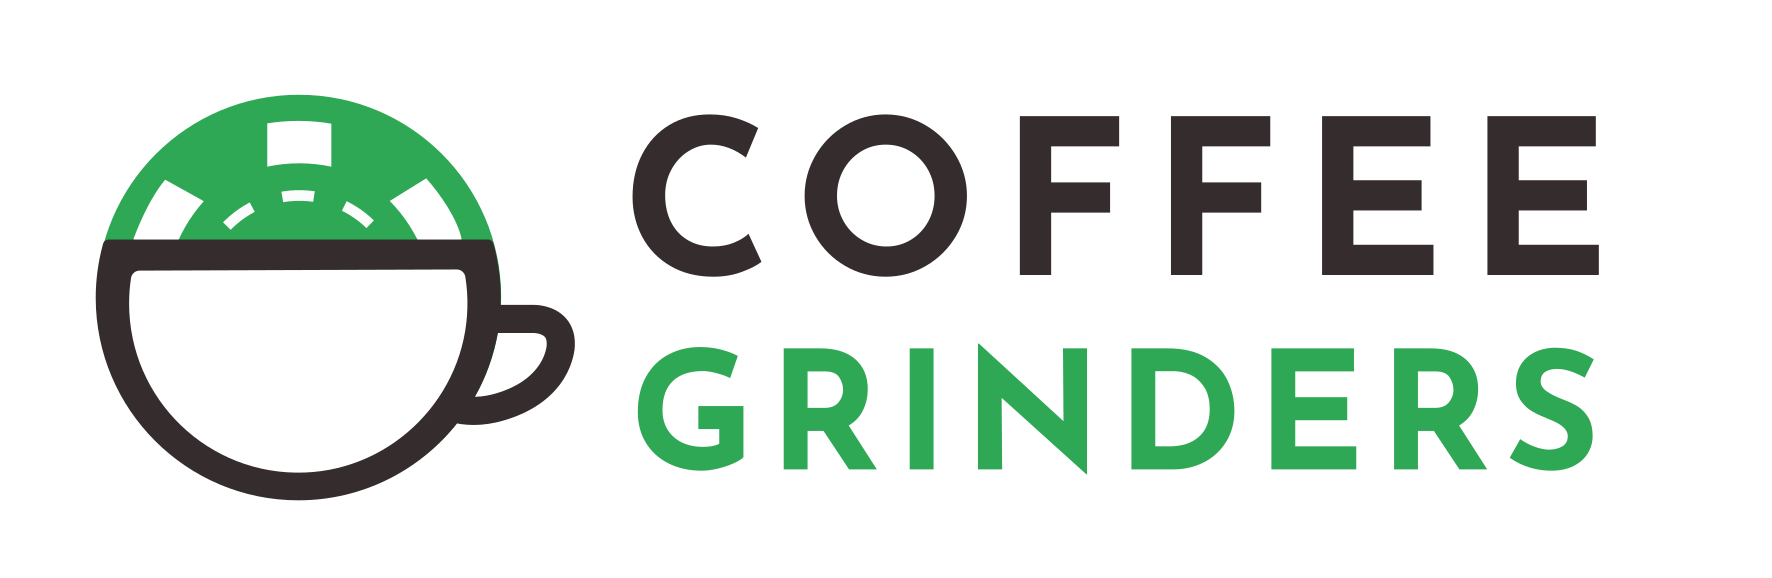 Coffee-Grinder-Logo-02